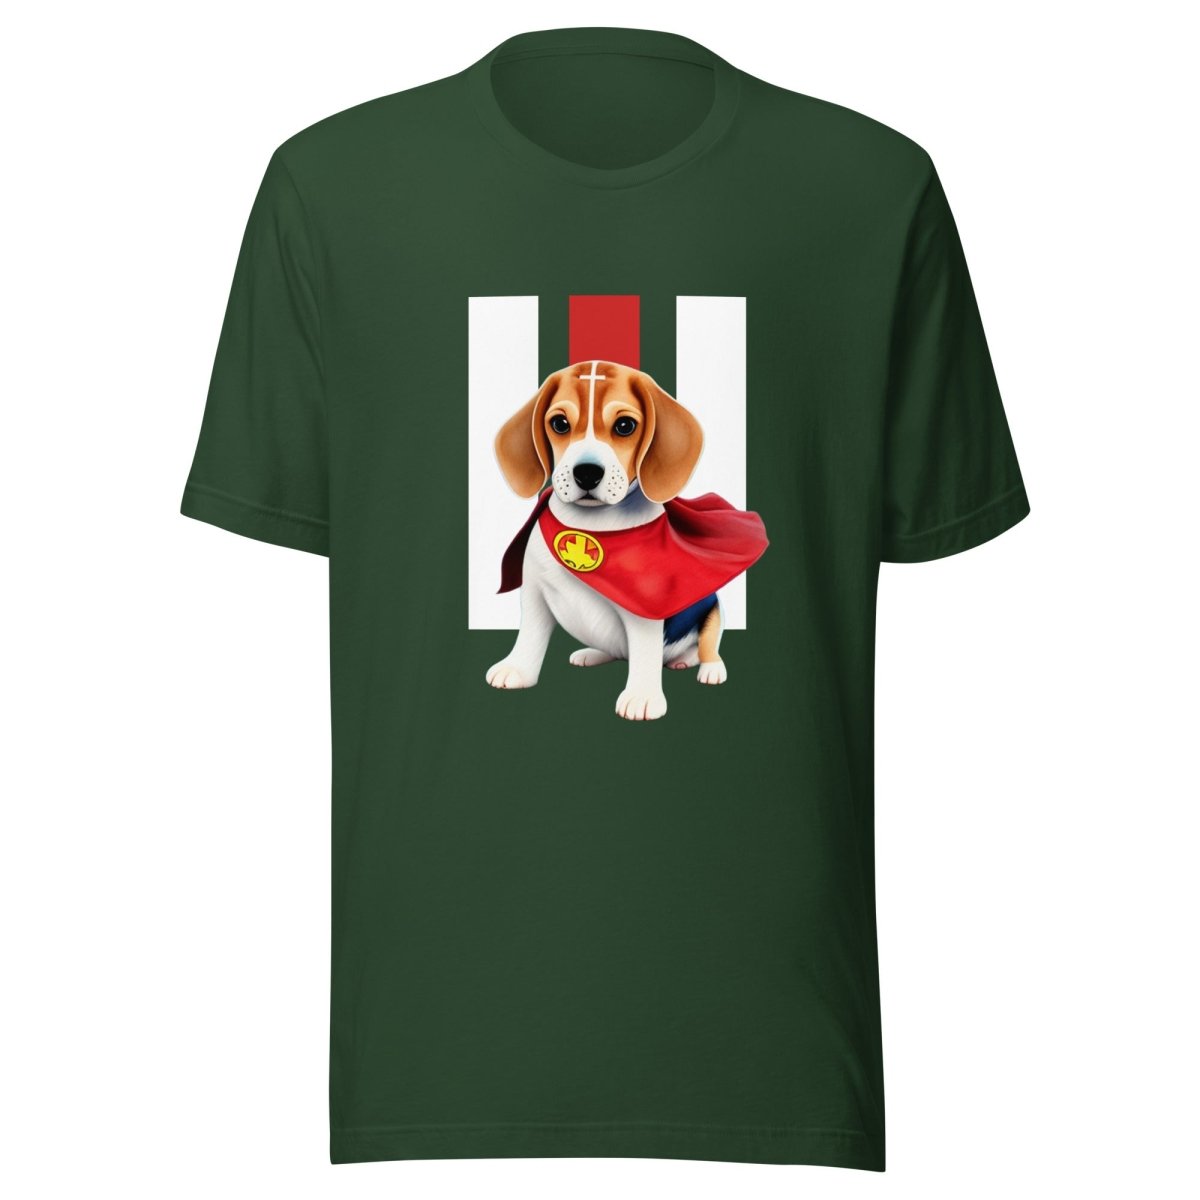 Super Beagle Staple T-Shirt - Funny Nikko